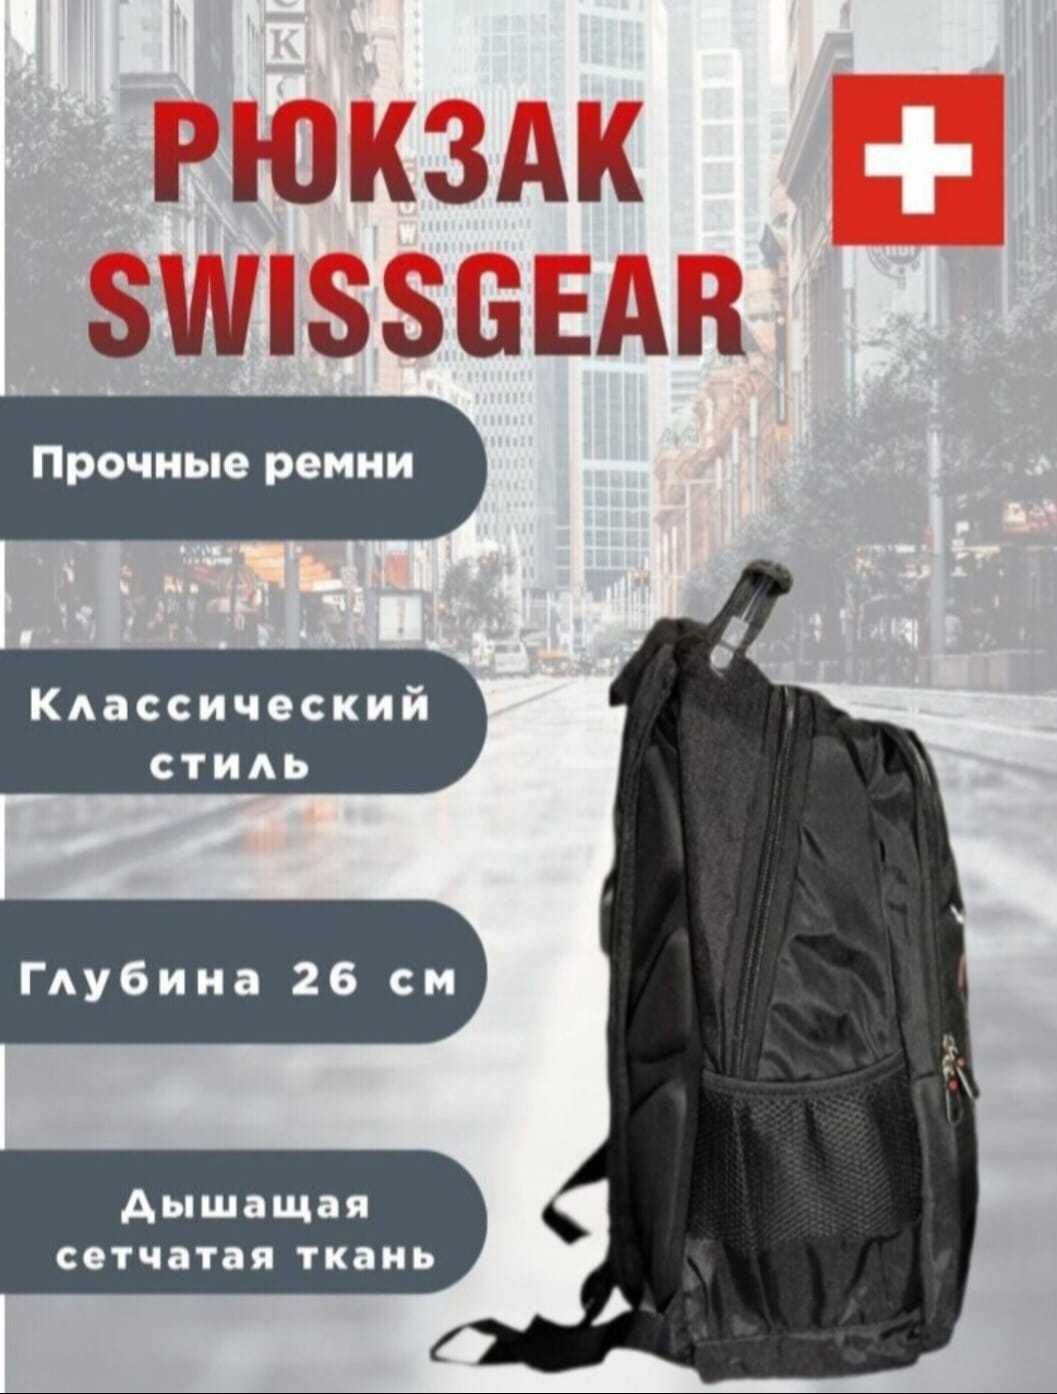 Рюкзак Swissgeаr 8810 новый